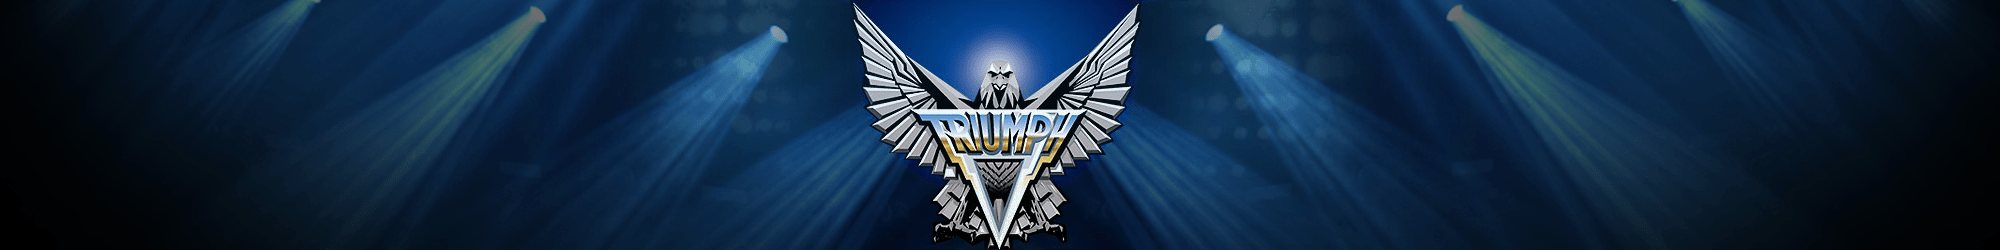 Triumph Band Logo - Triumph - The Legendary Canadian Rock Band